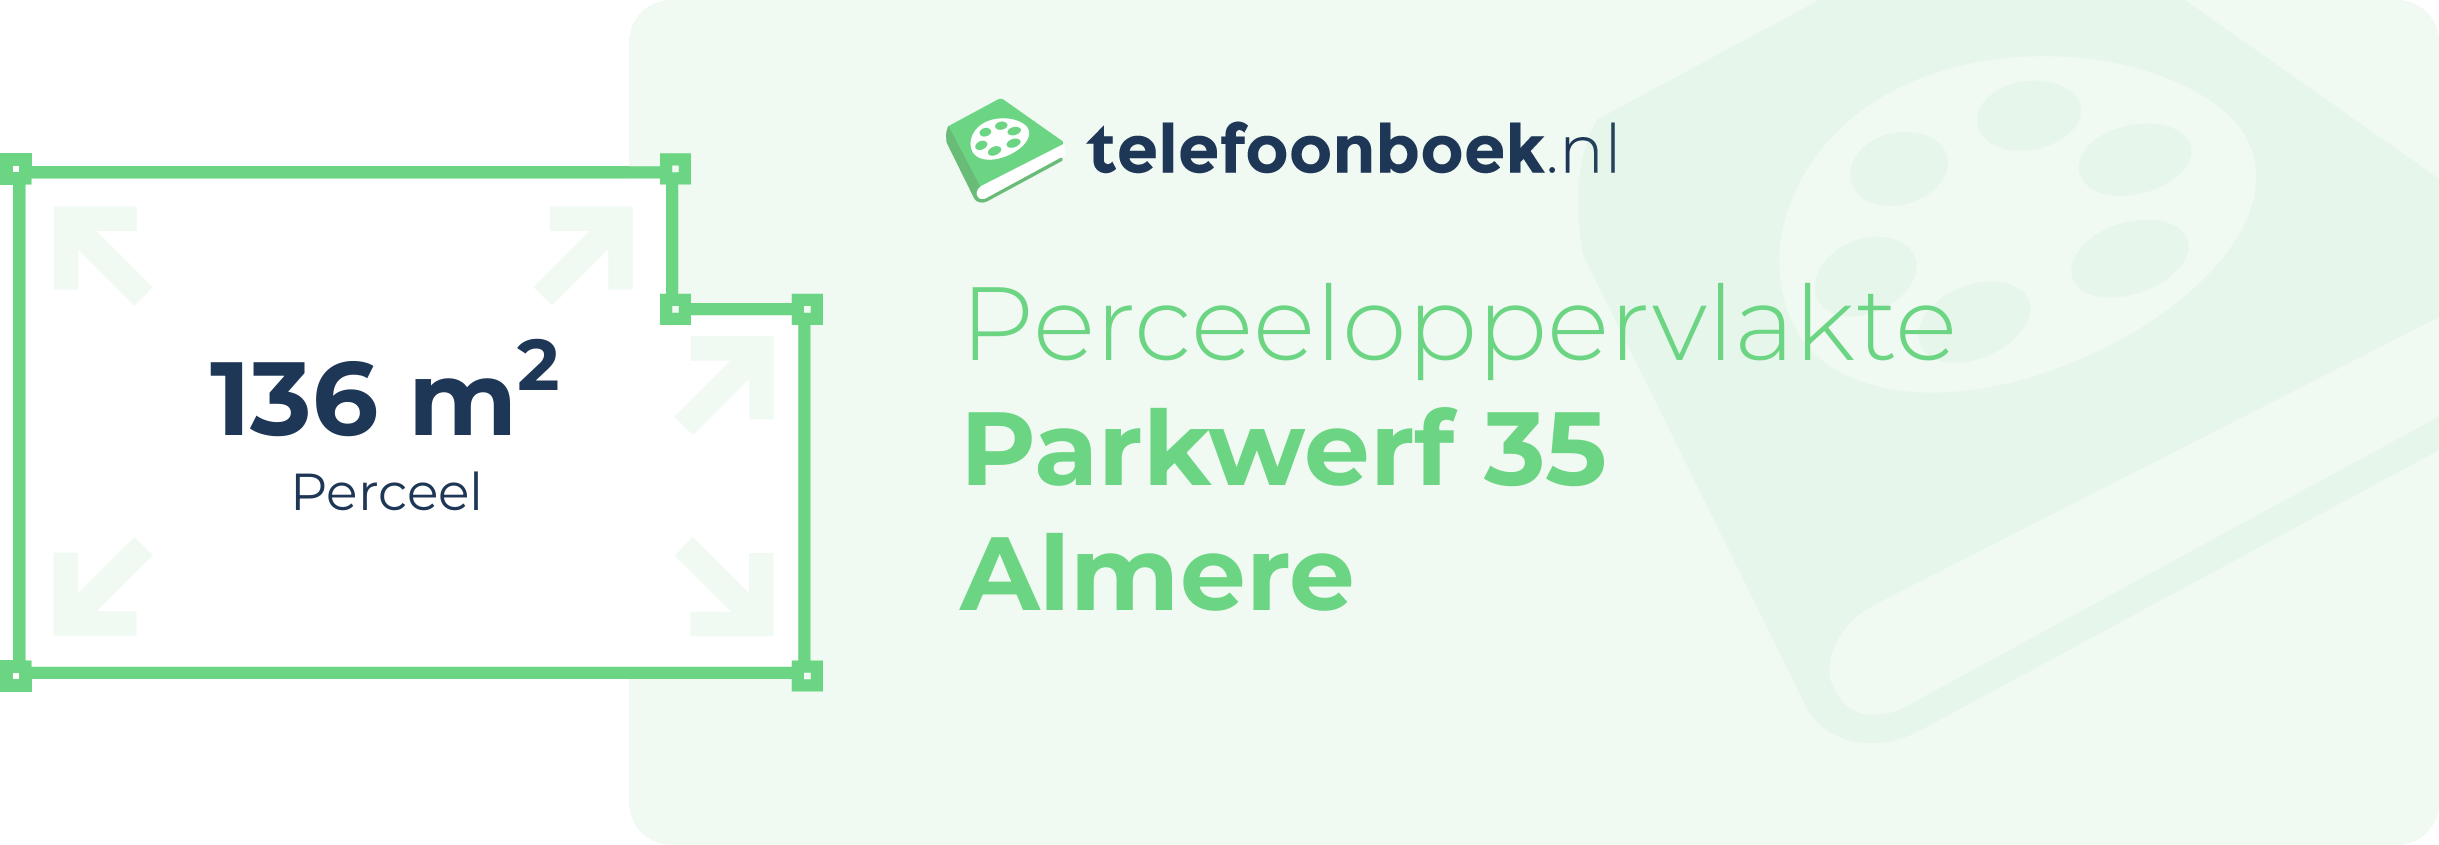 Perceeloppervlakte Parkwerf 35 Almere